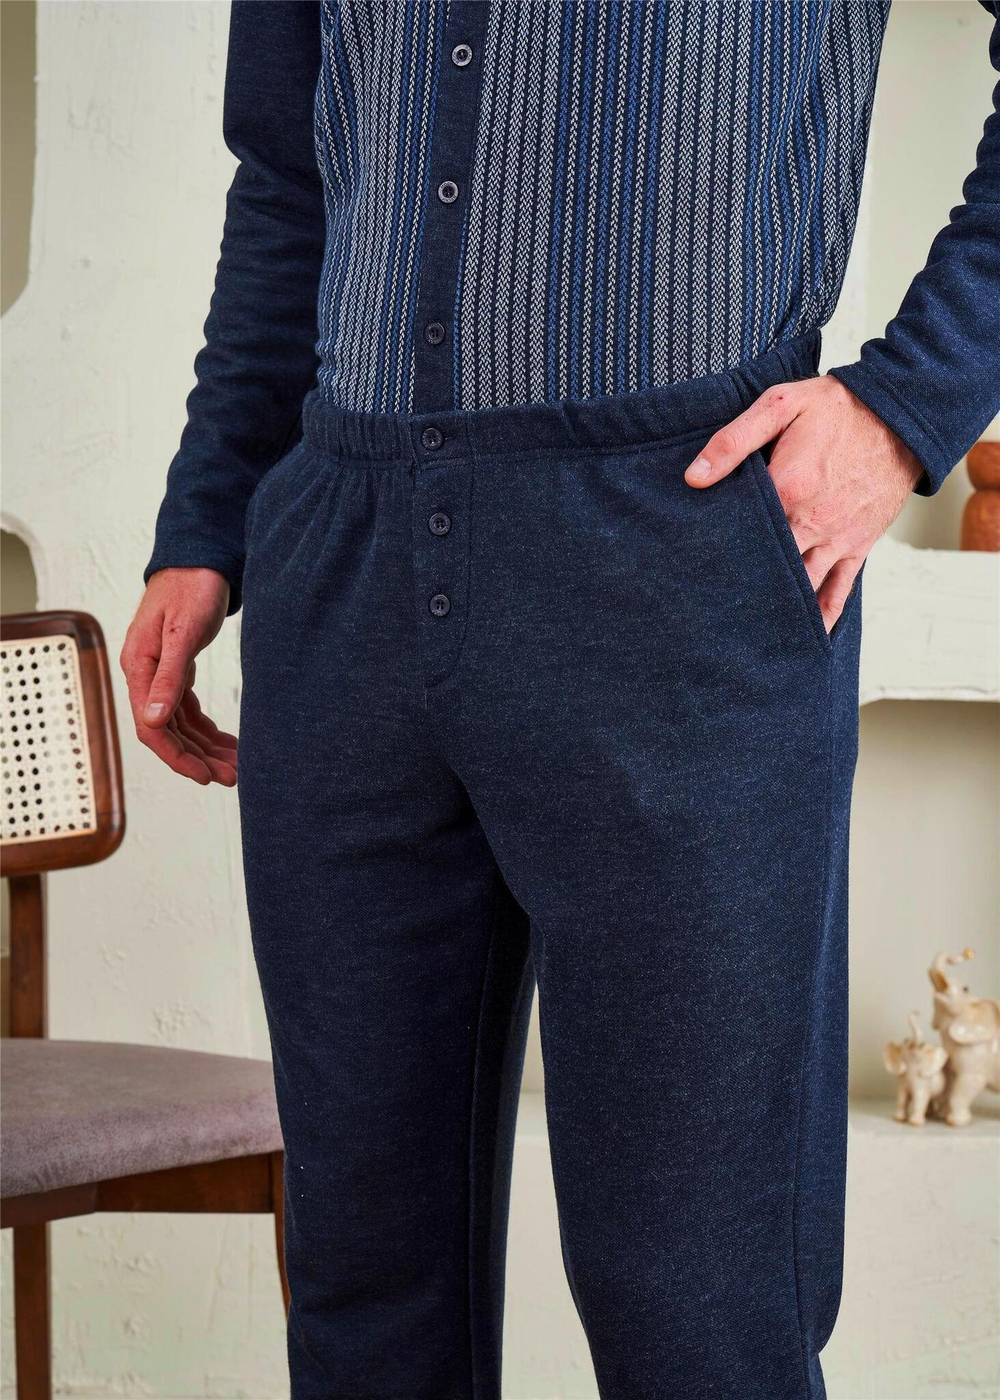 RELAX MODE - Пижама мужская пижама мужская со штанами - 10736